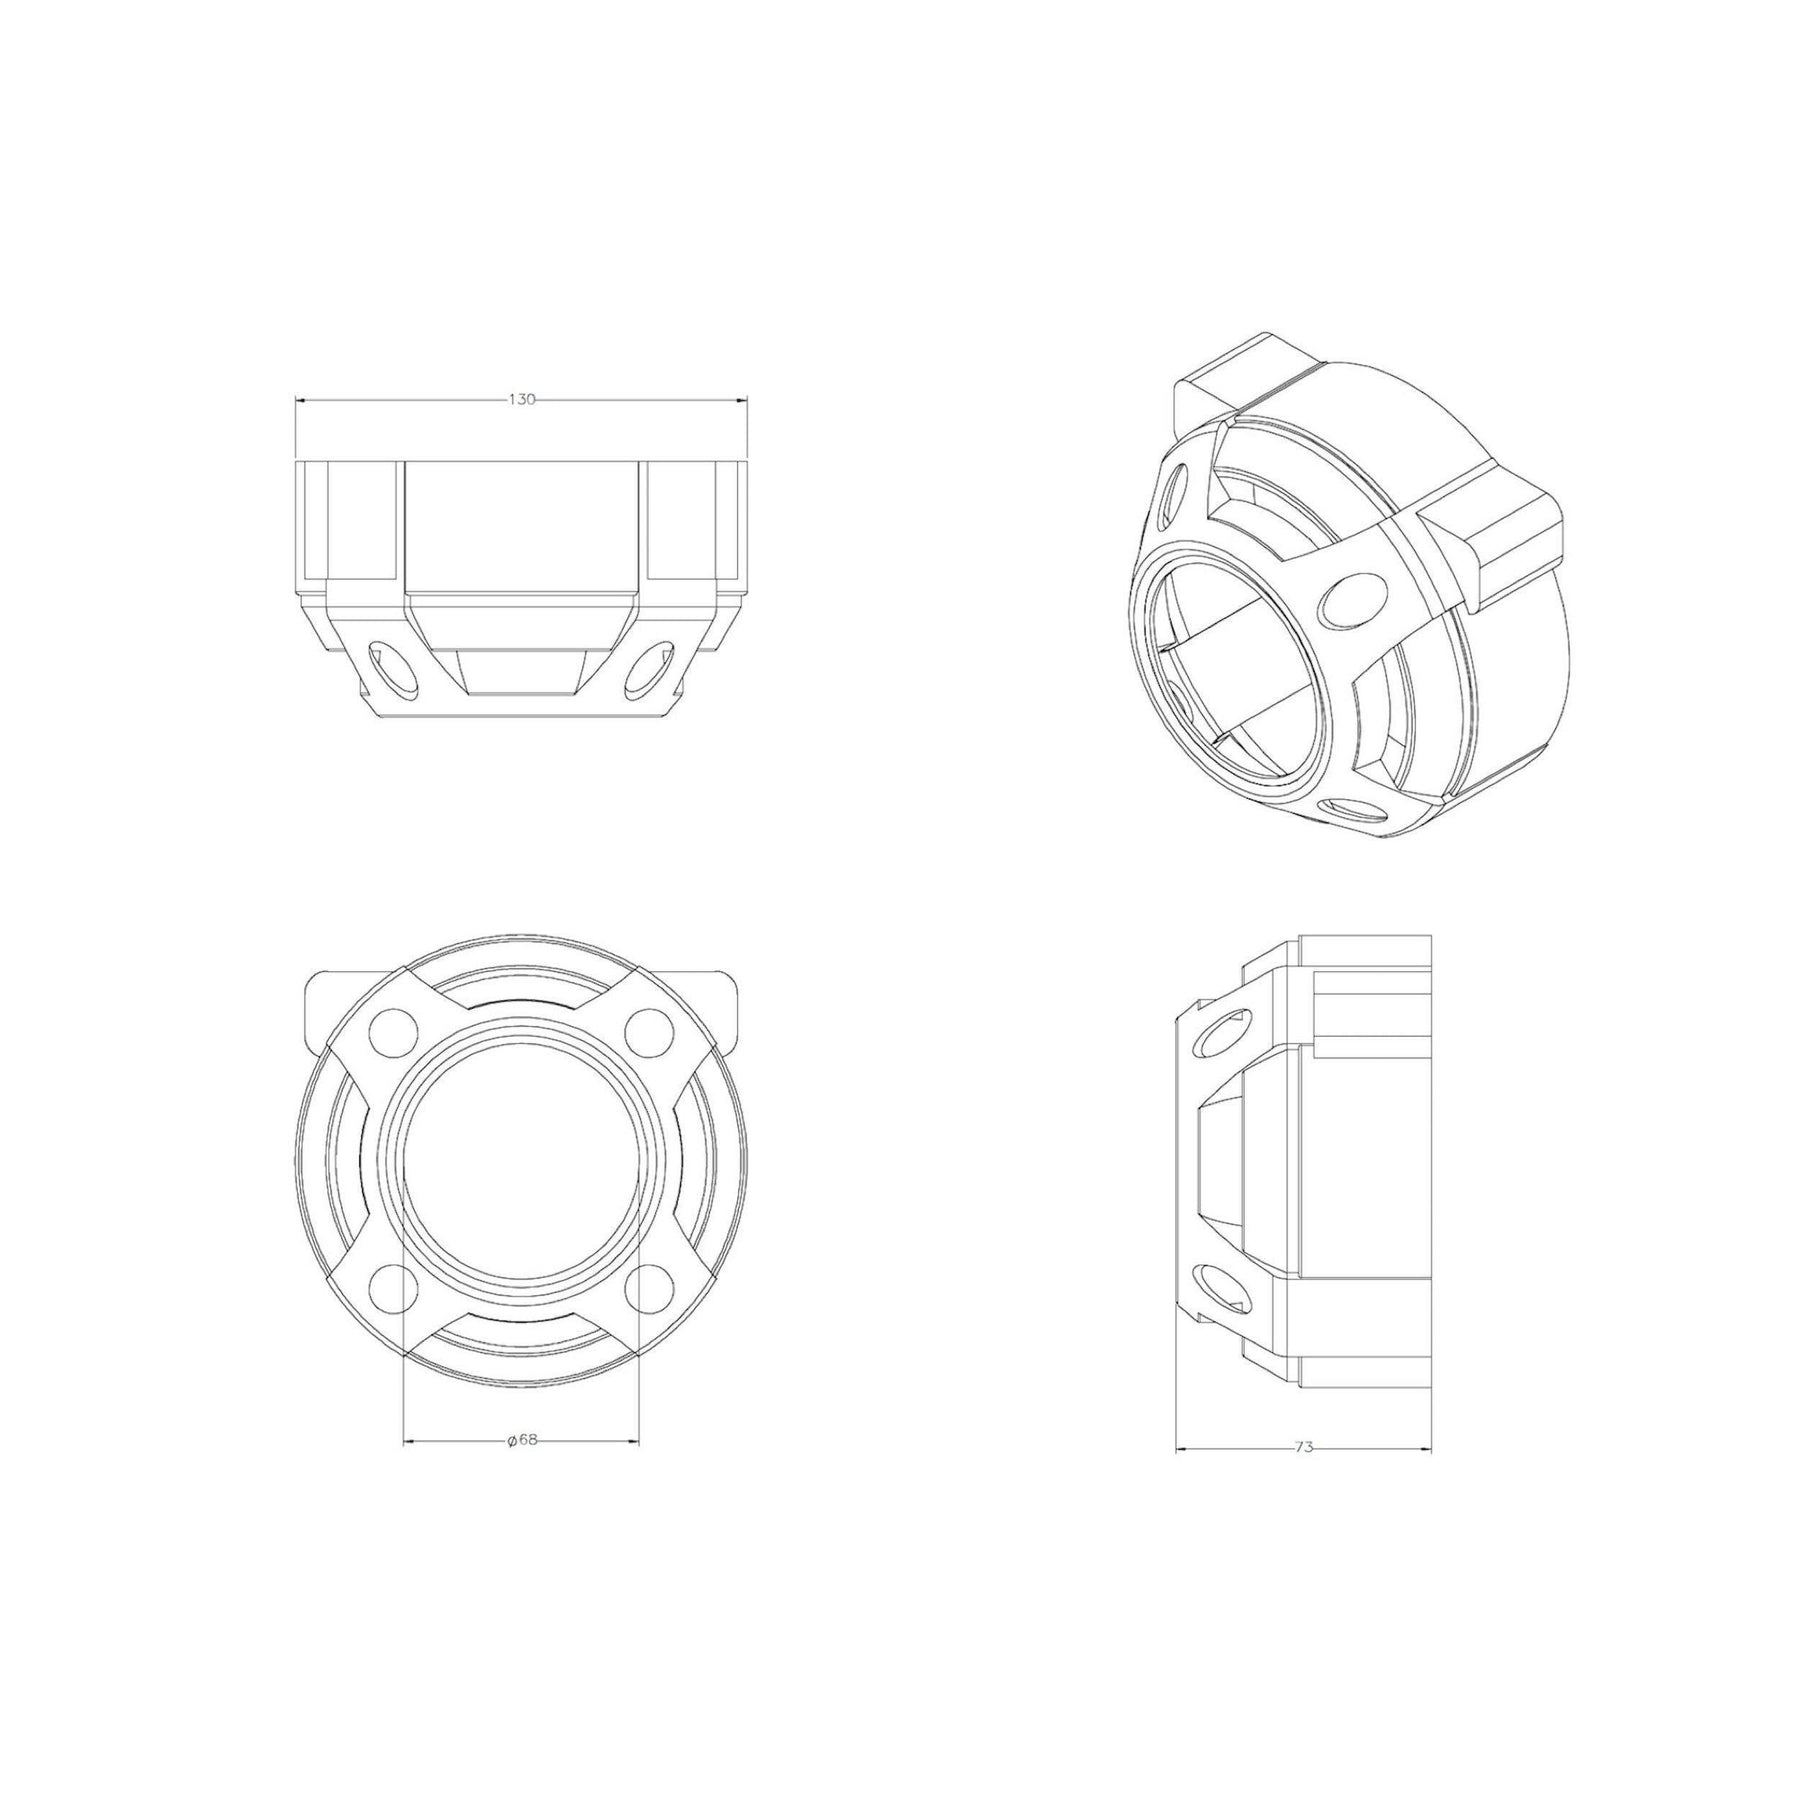 Panamera Shroud (S250)-Lighting Accessories-Morimoto-S250-Dirty Diesel Customs